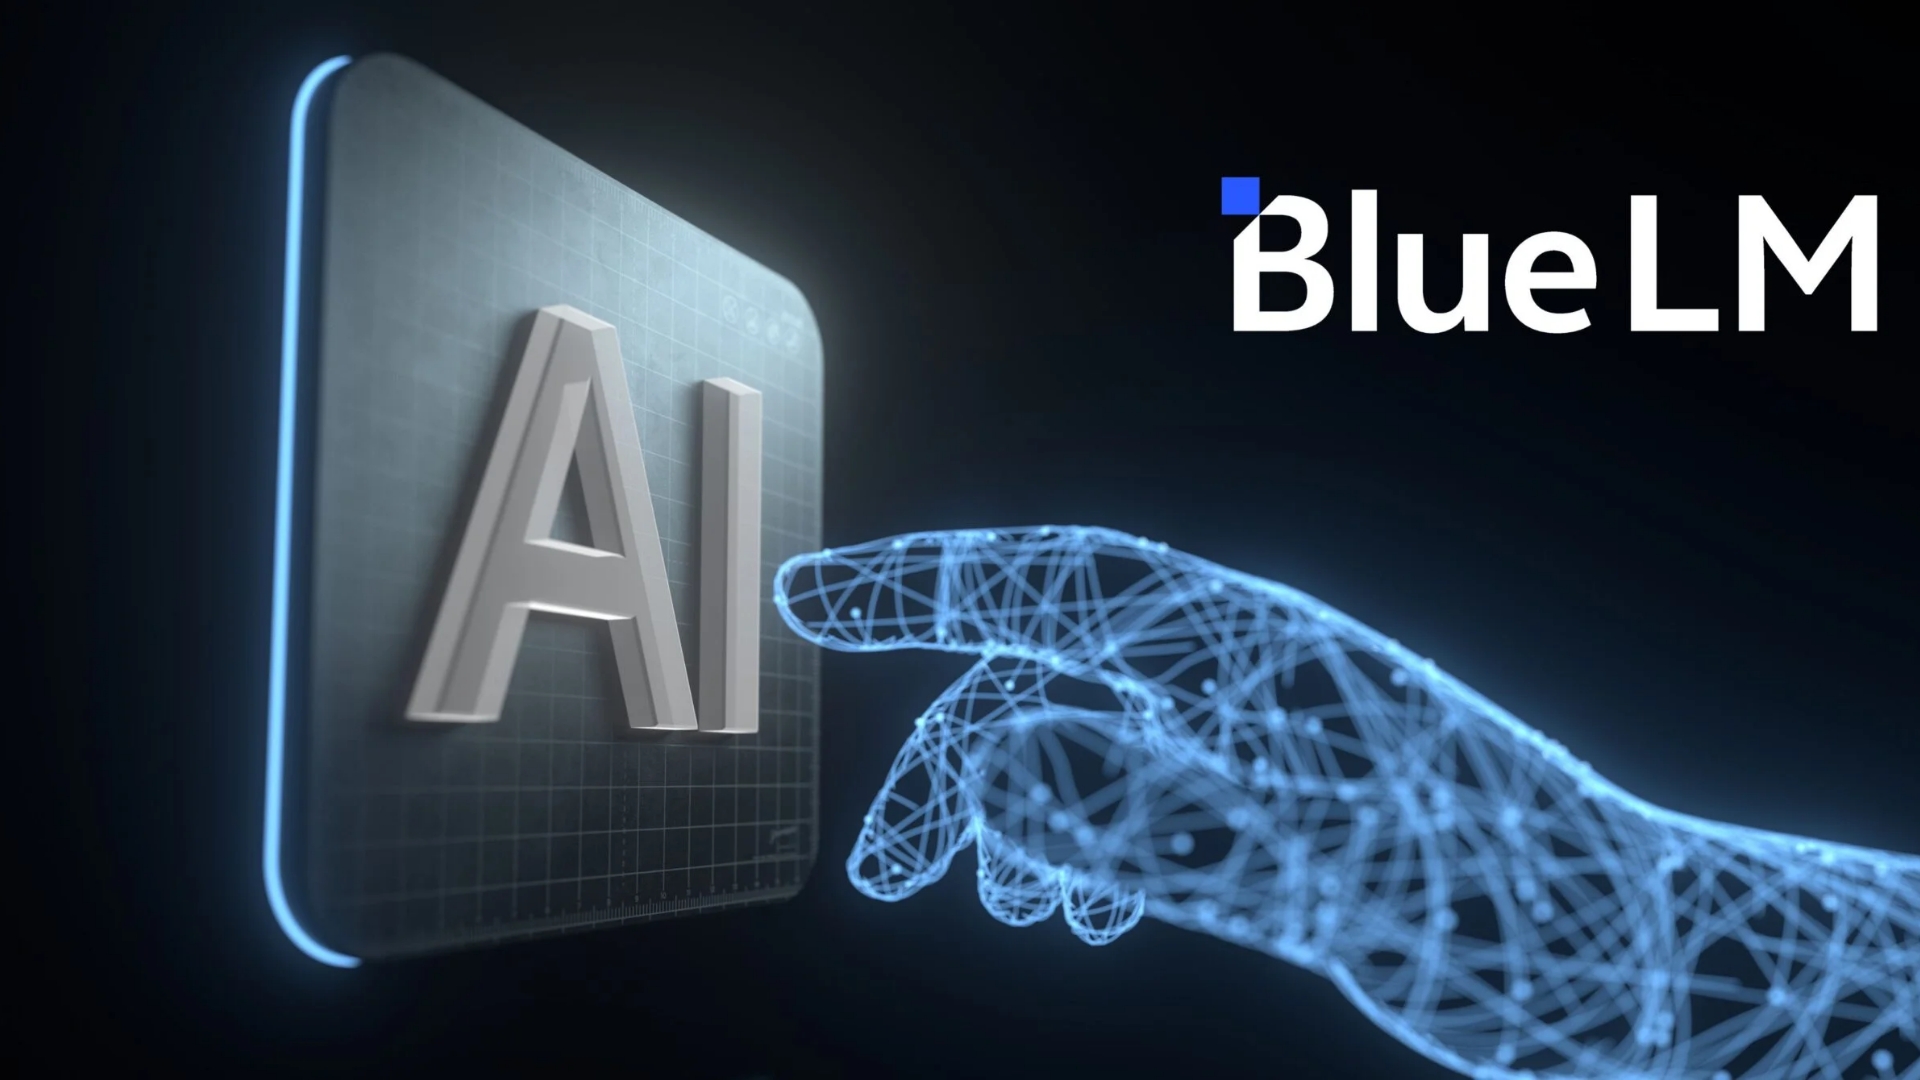 Vivo unveils the BlueLM artificial intelligence system.